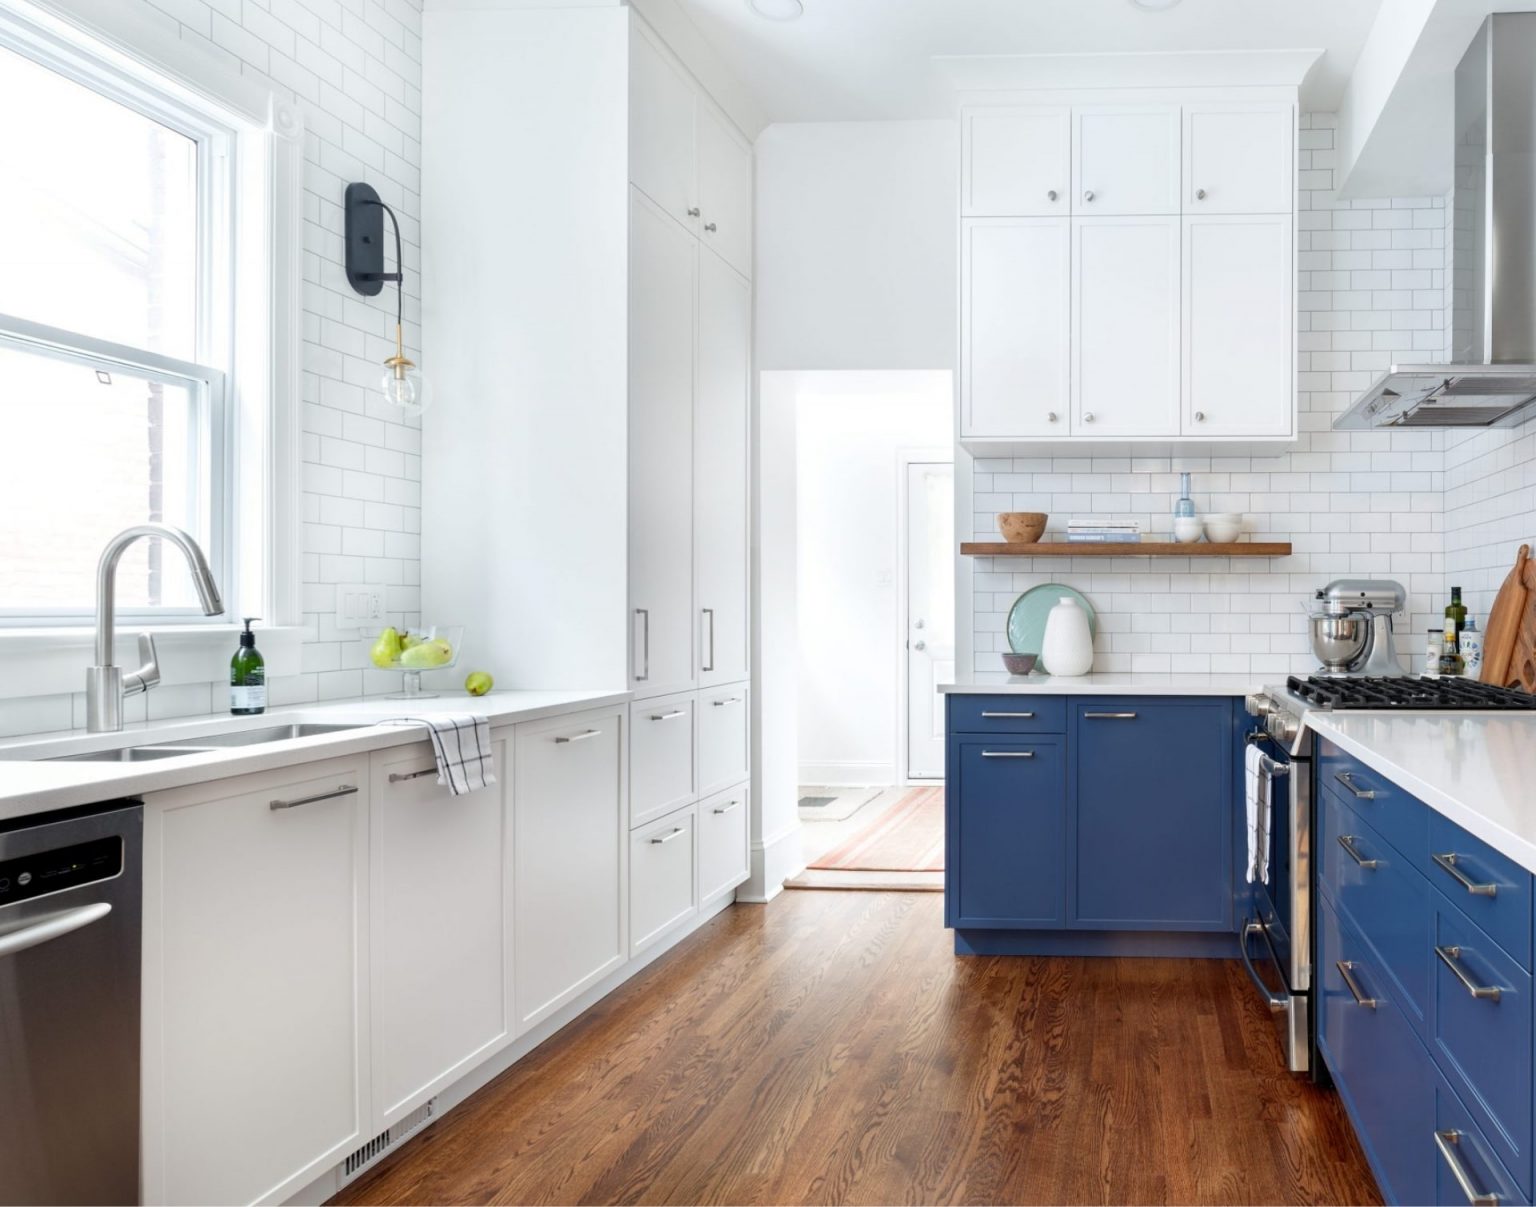 Upgrade your home with new cabinet doors - Swedish Doors